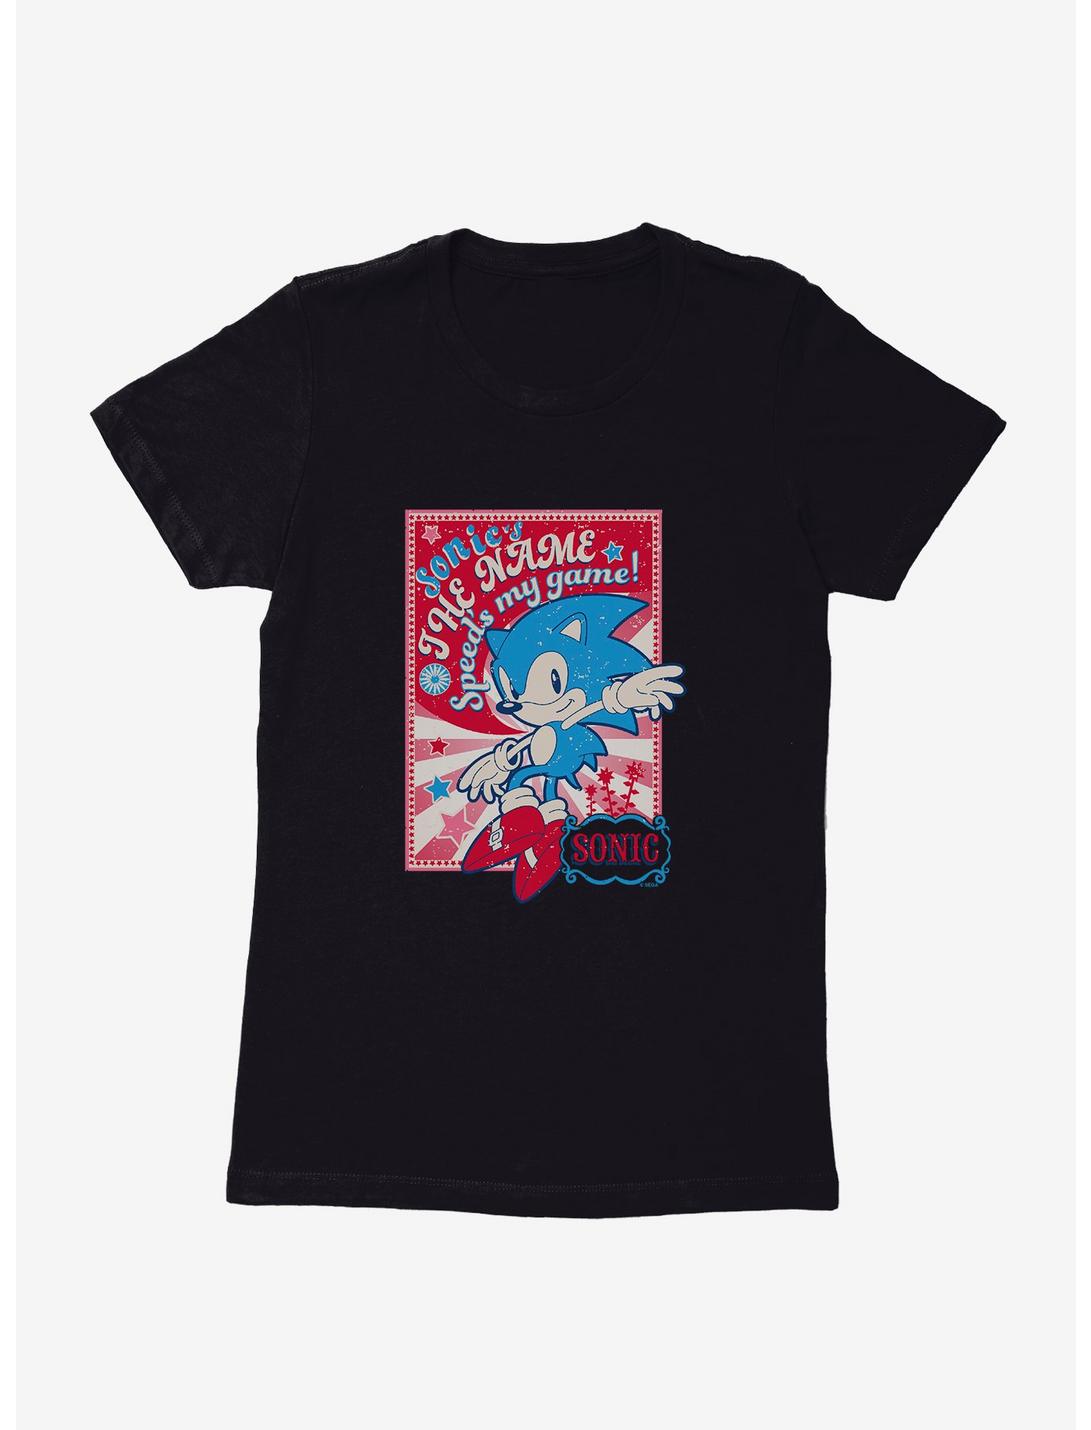 Sonic The Hedgehog Sonic's The Name Womens T-Shirt, BLACK, hi-res